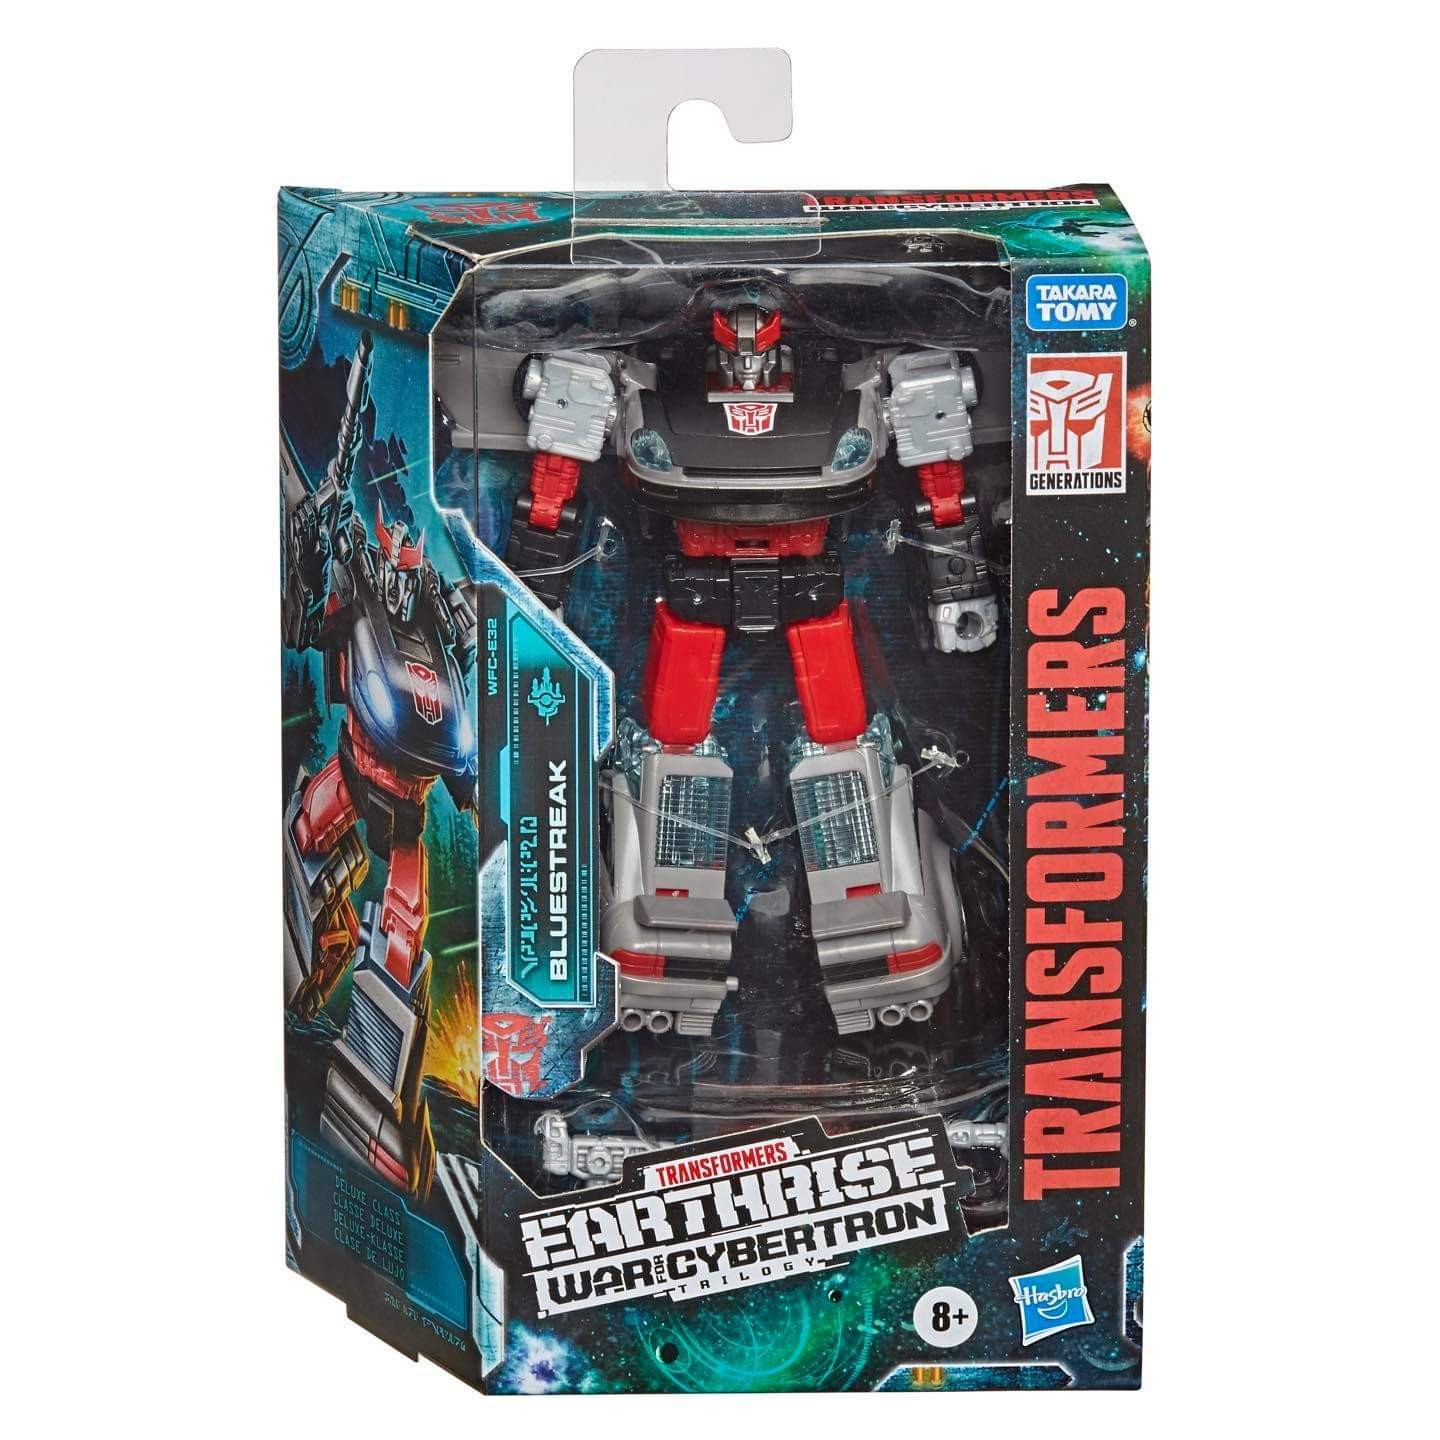 Transformers News: New In Box Image of Transformers Earthrise Bluestreak